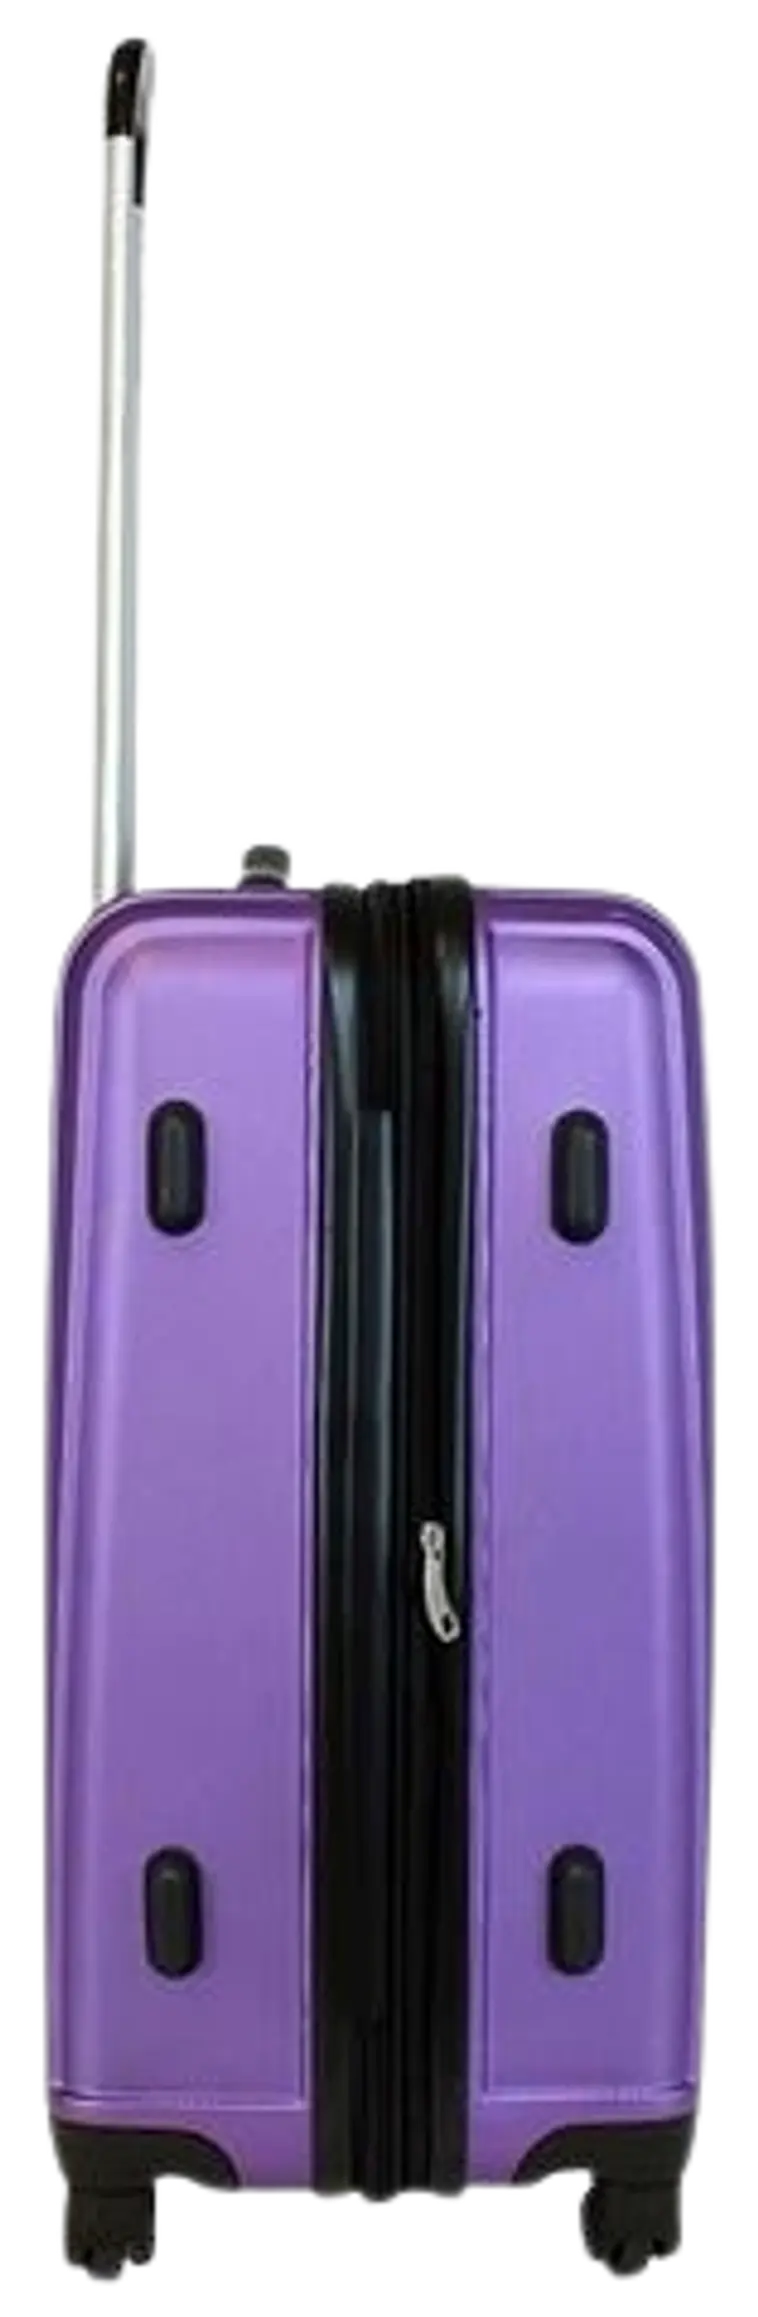 Cavalet Malibu matkalaukku M 64 cm, lila - 4